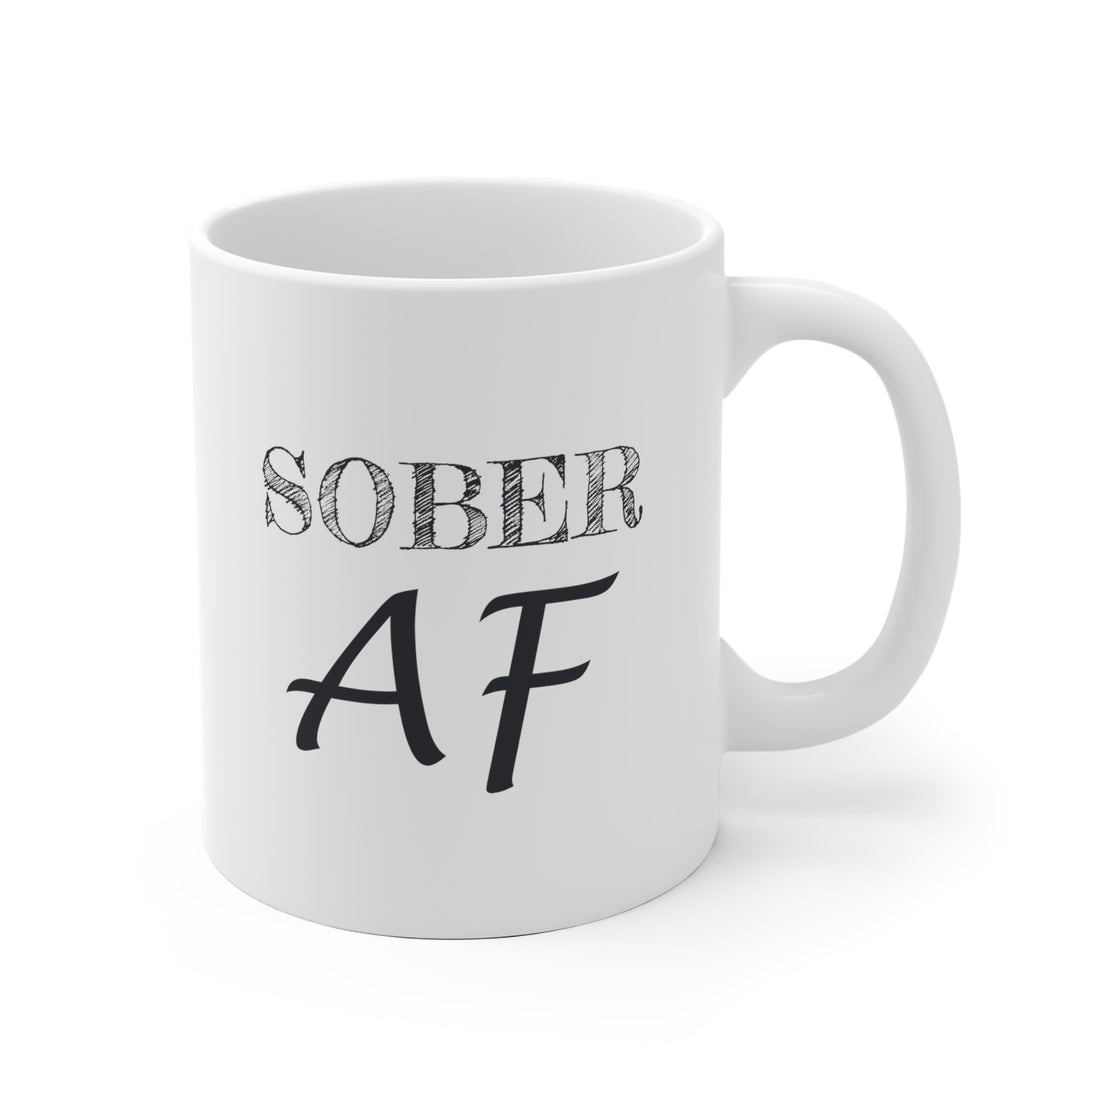 Sober AF - White Ceramic Mug 2 sizes Available